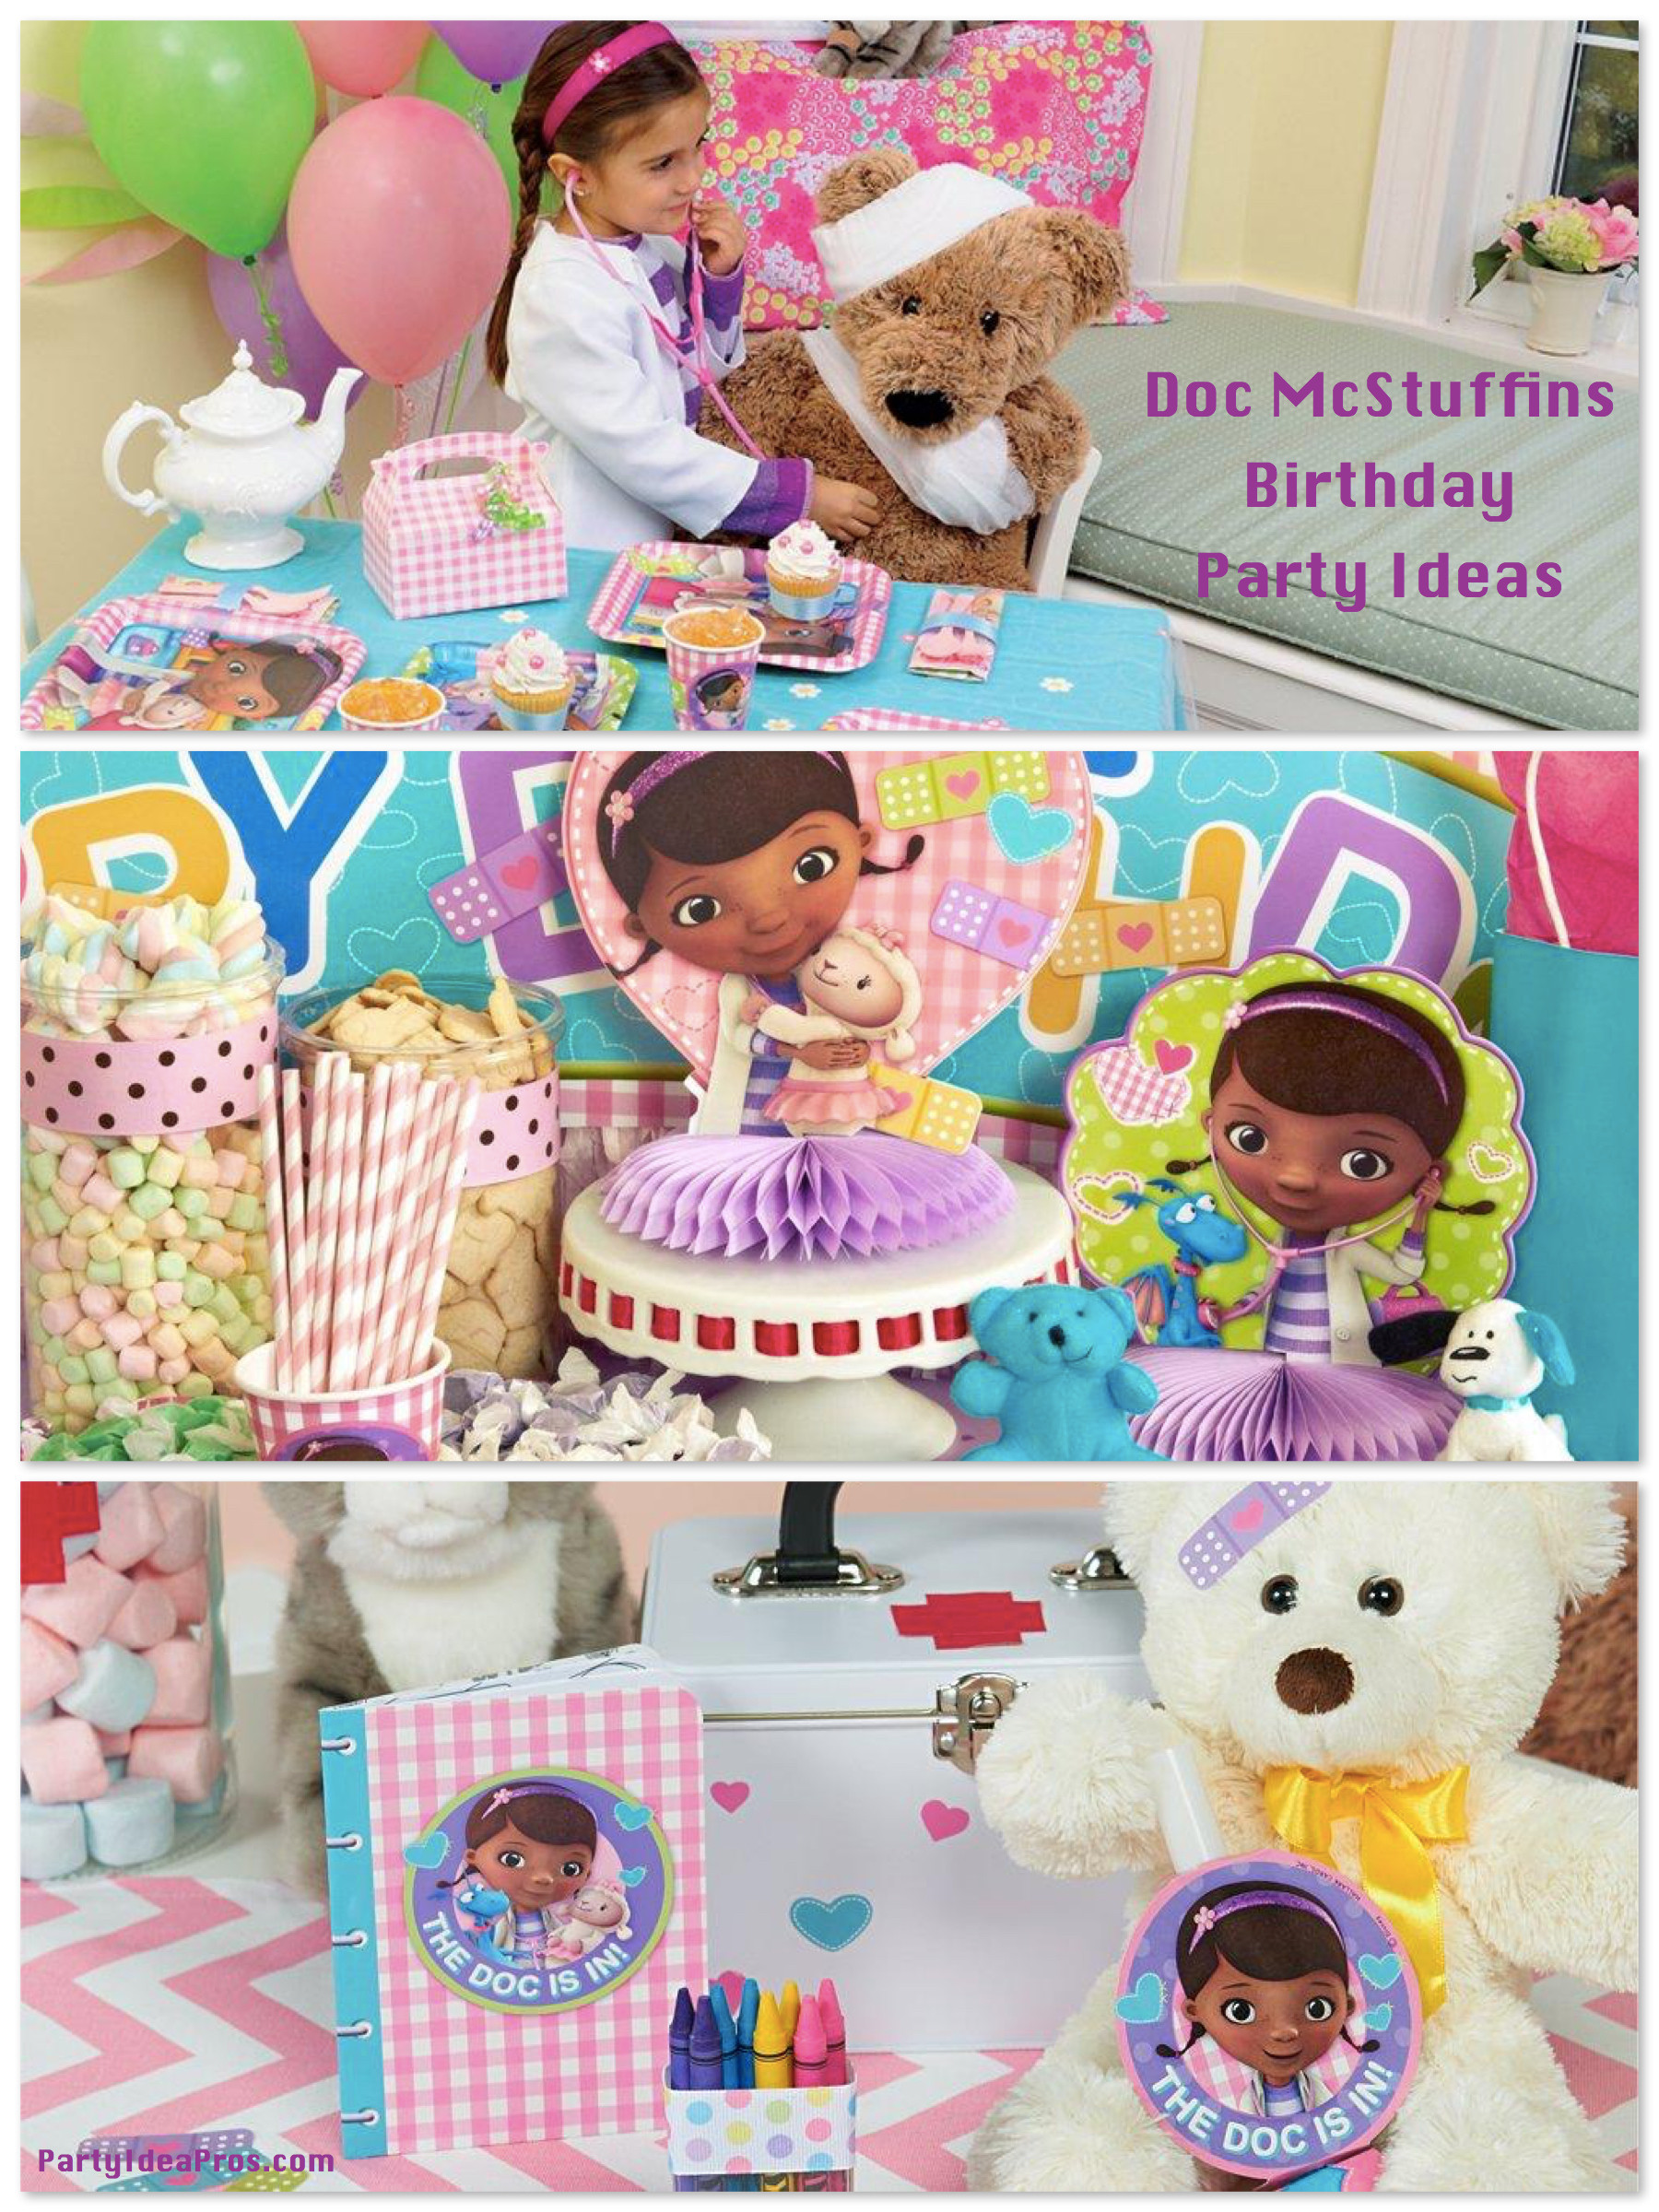 Doc Mcstuffins Birthday Party Ideas
 Doc McStuffins Birthday Party Planning Ideas & Supplies